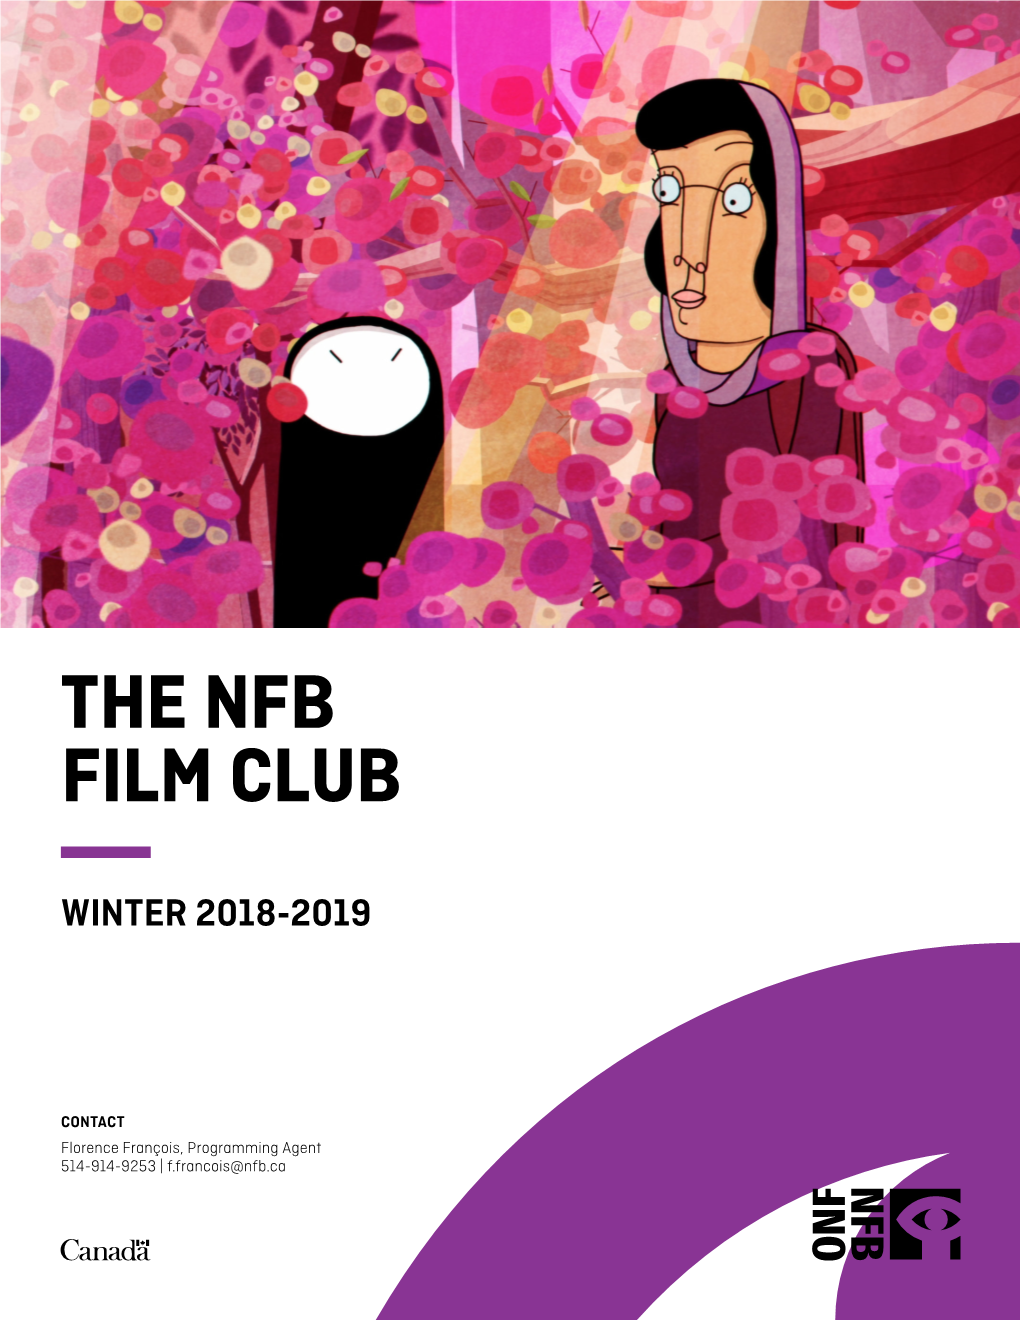 The Nfb Film Club